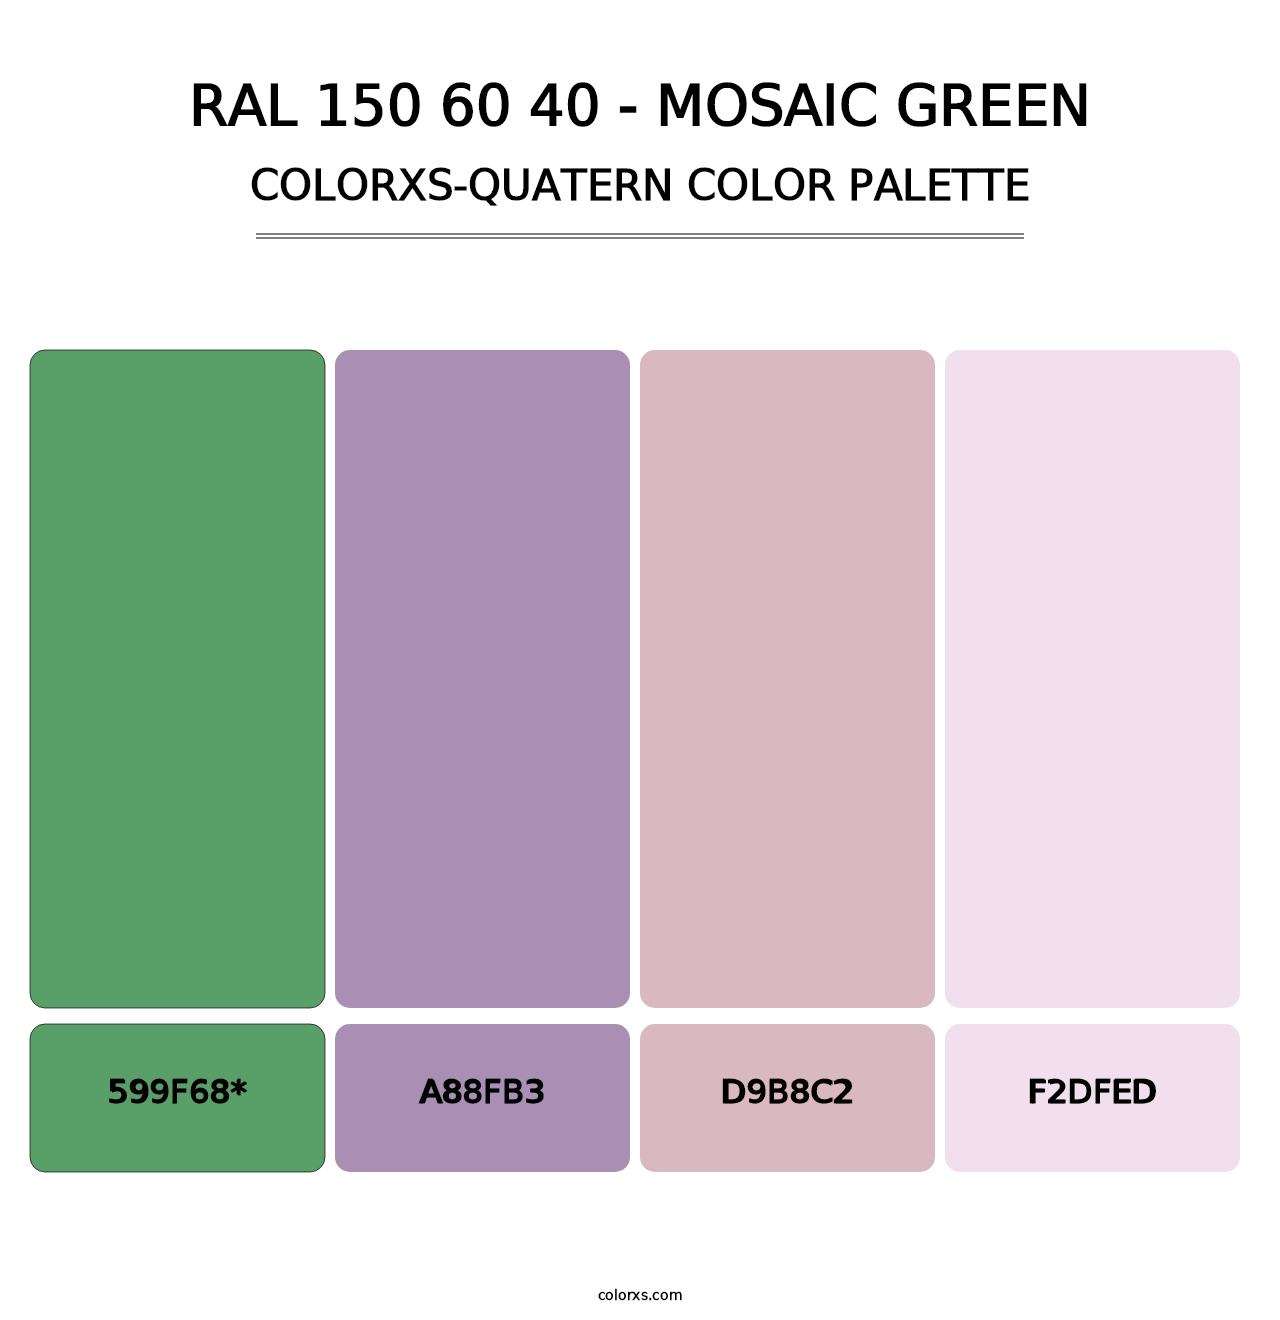 RAL 150 60 40 - Mosaic Green - Colorxs Quatern Palette